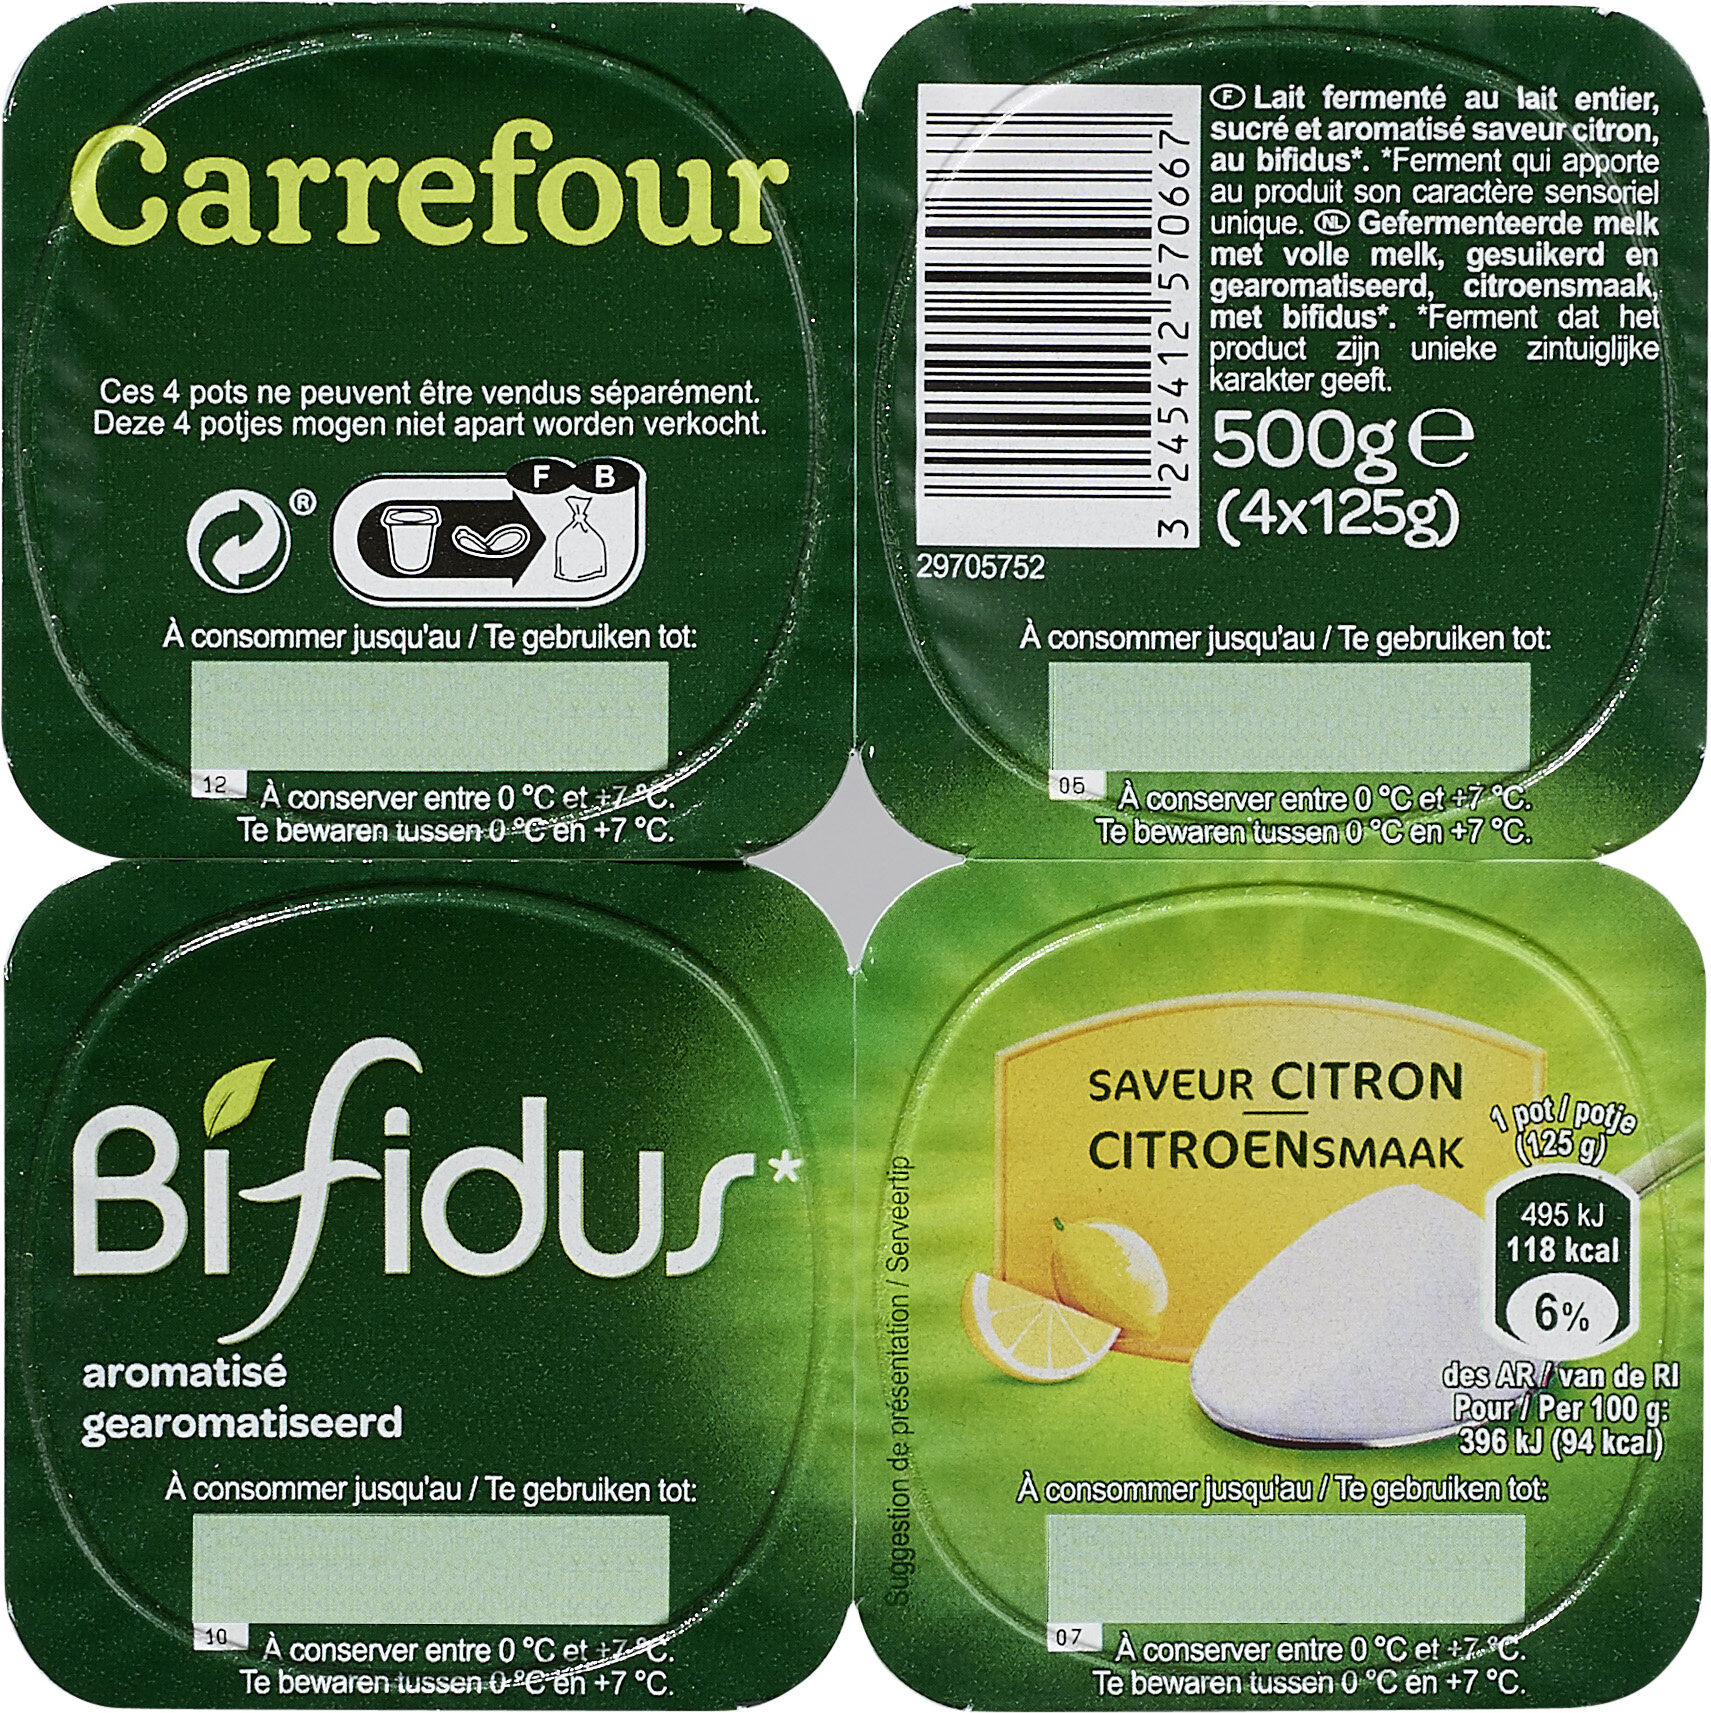 Bifidus* saveur citron - Produkt - fr